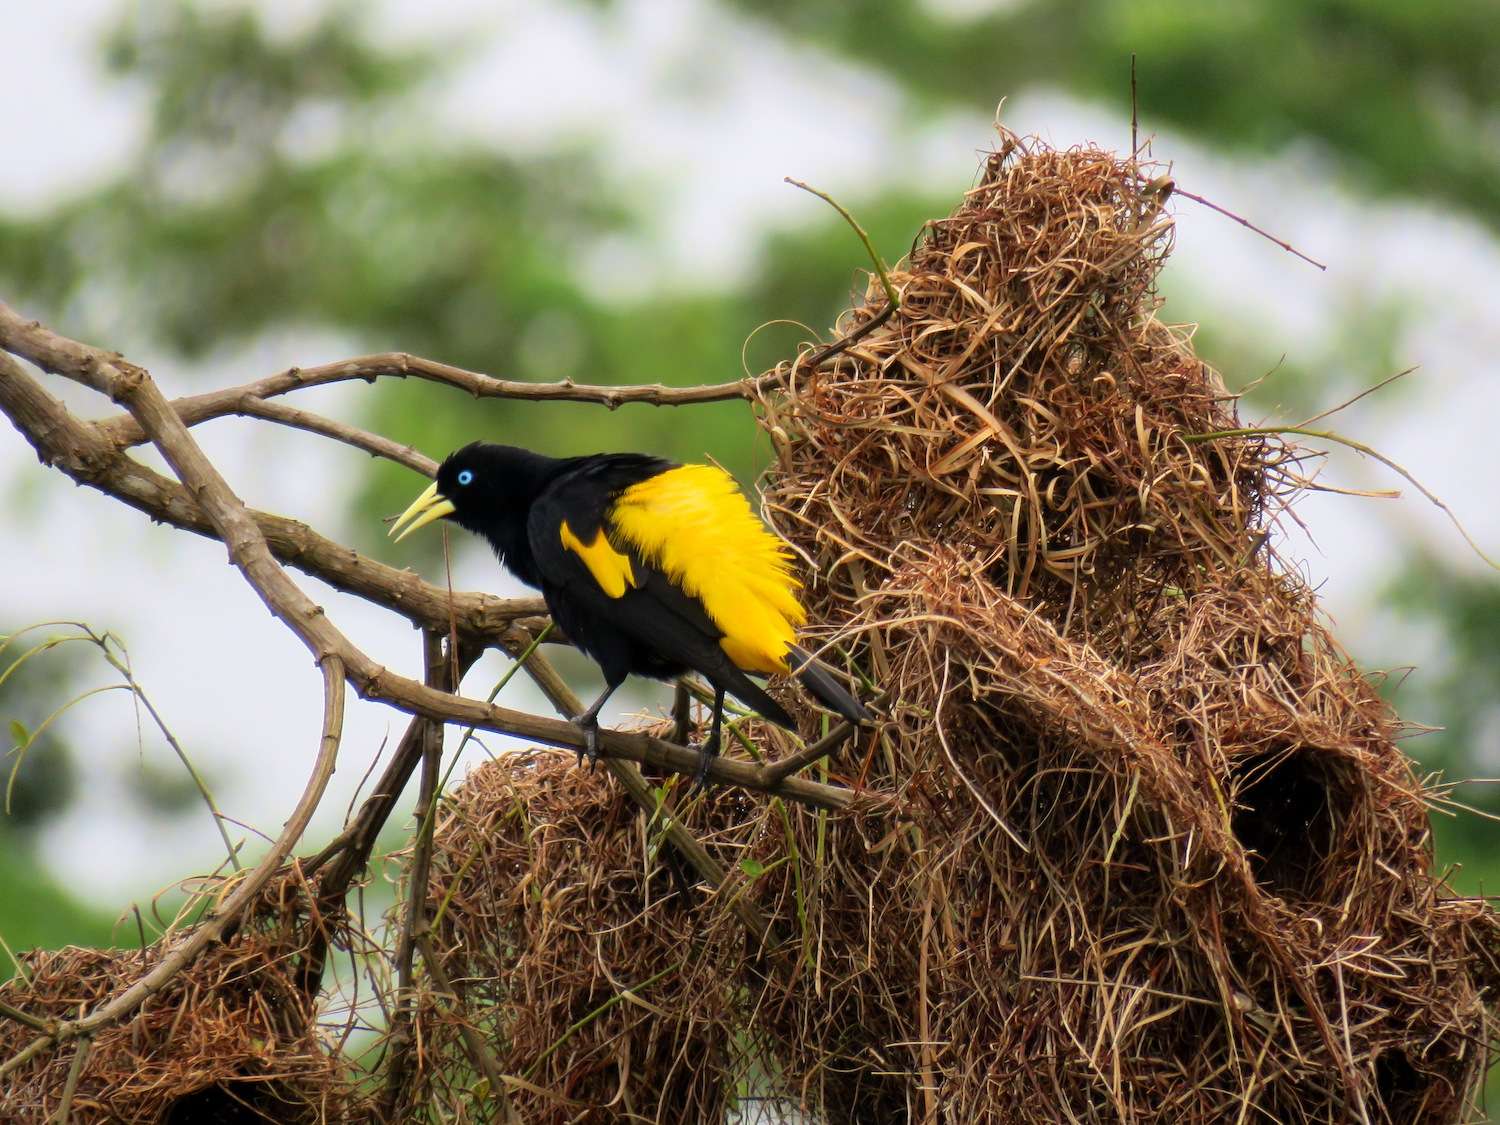 Yellow-rumped Cacique in the Peruvian Amazon.